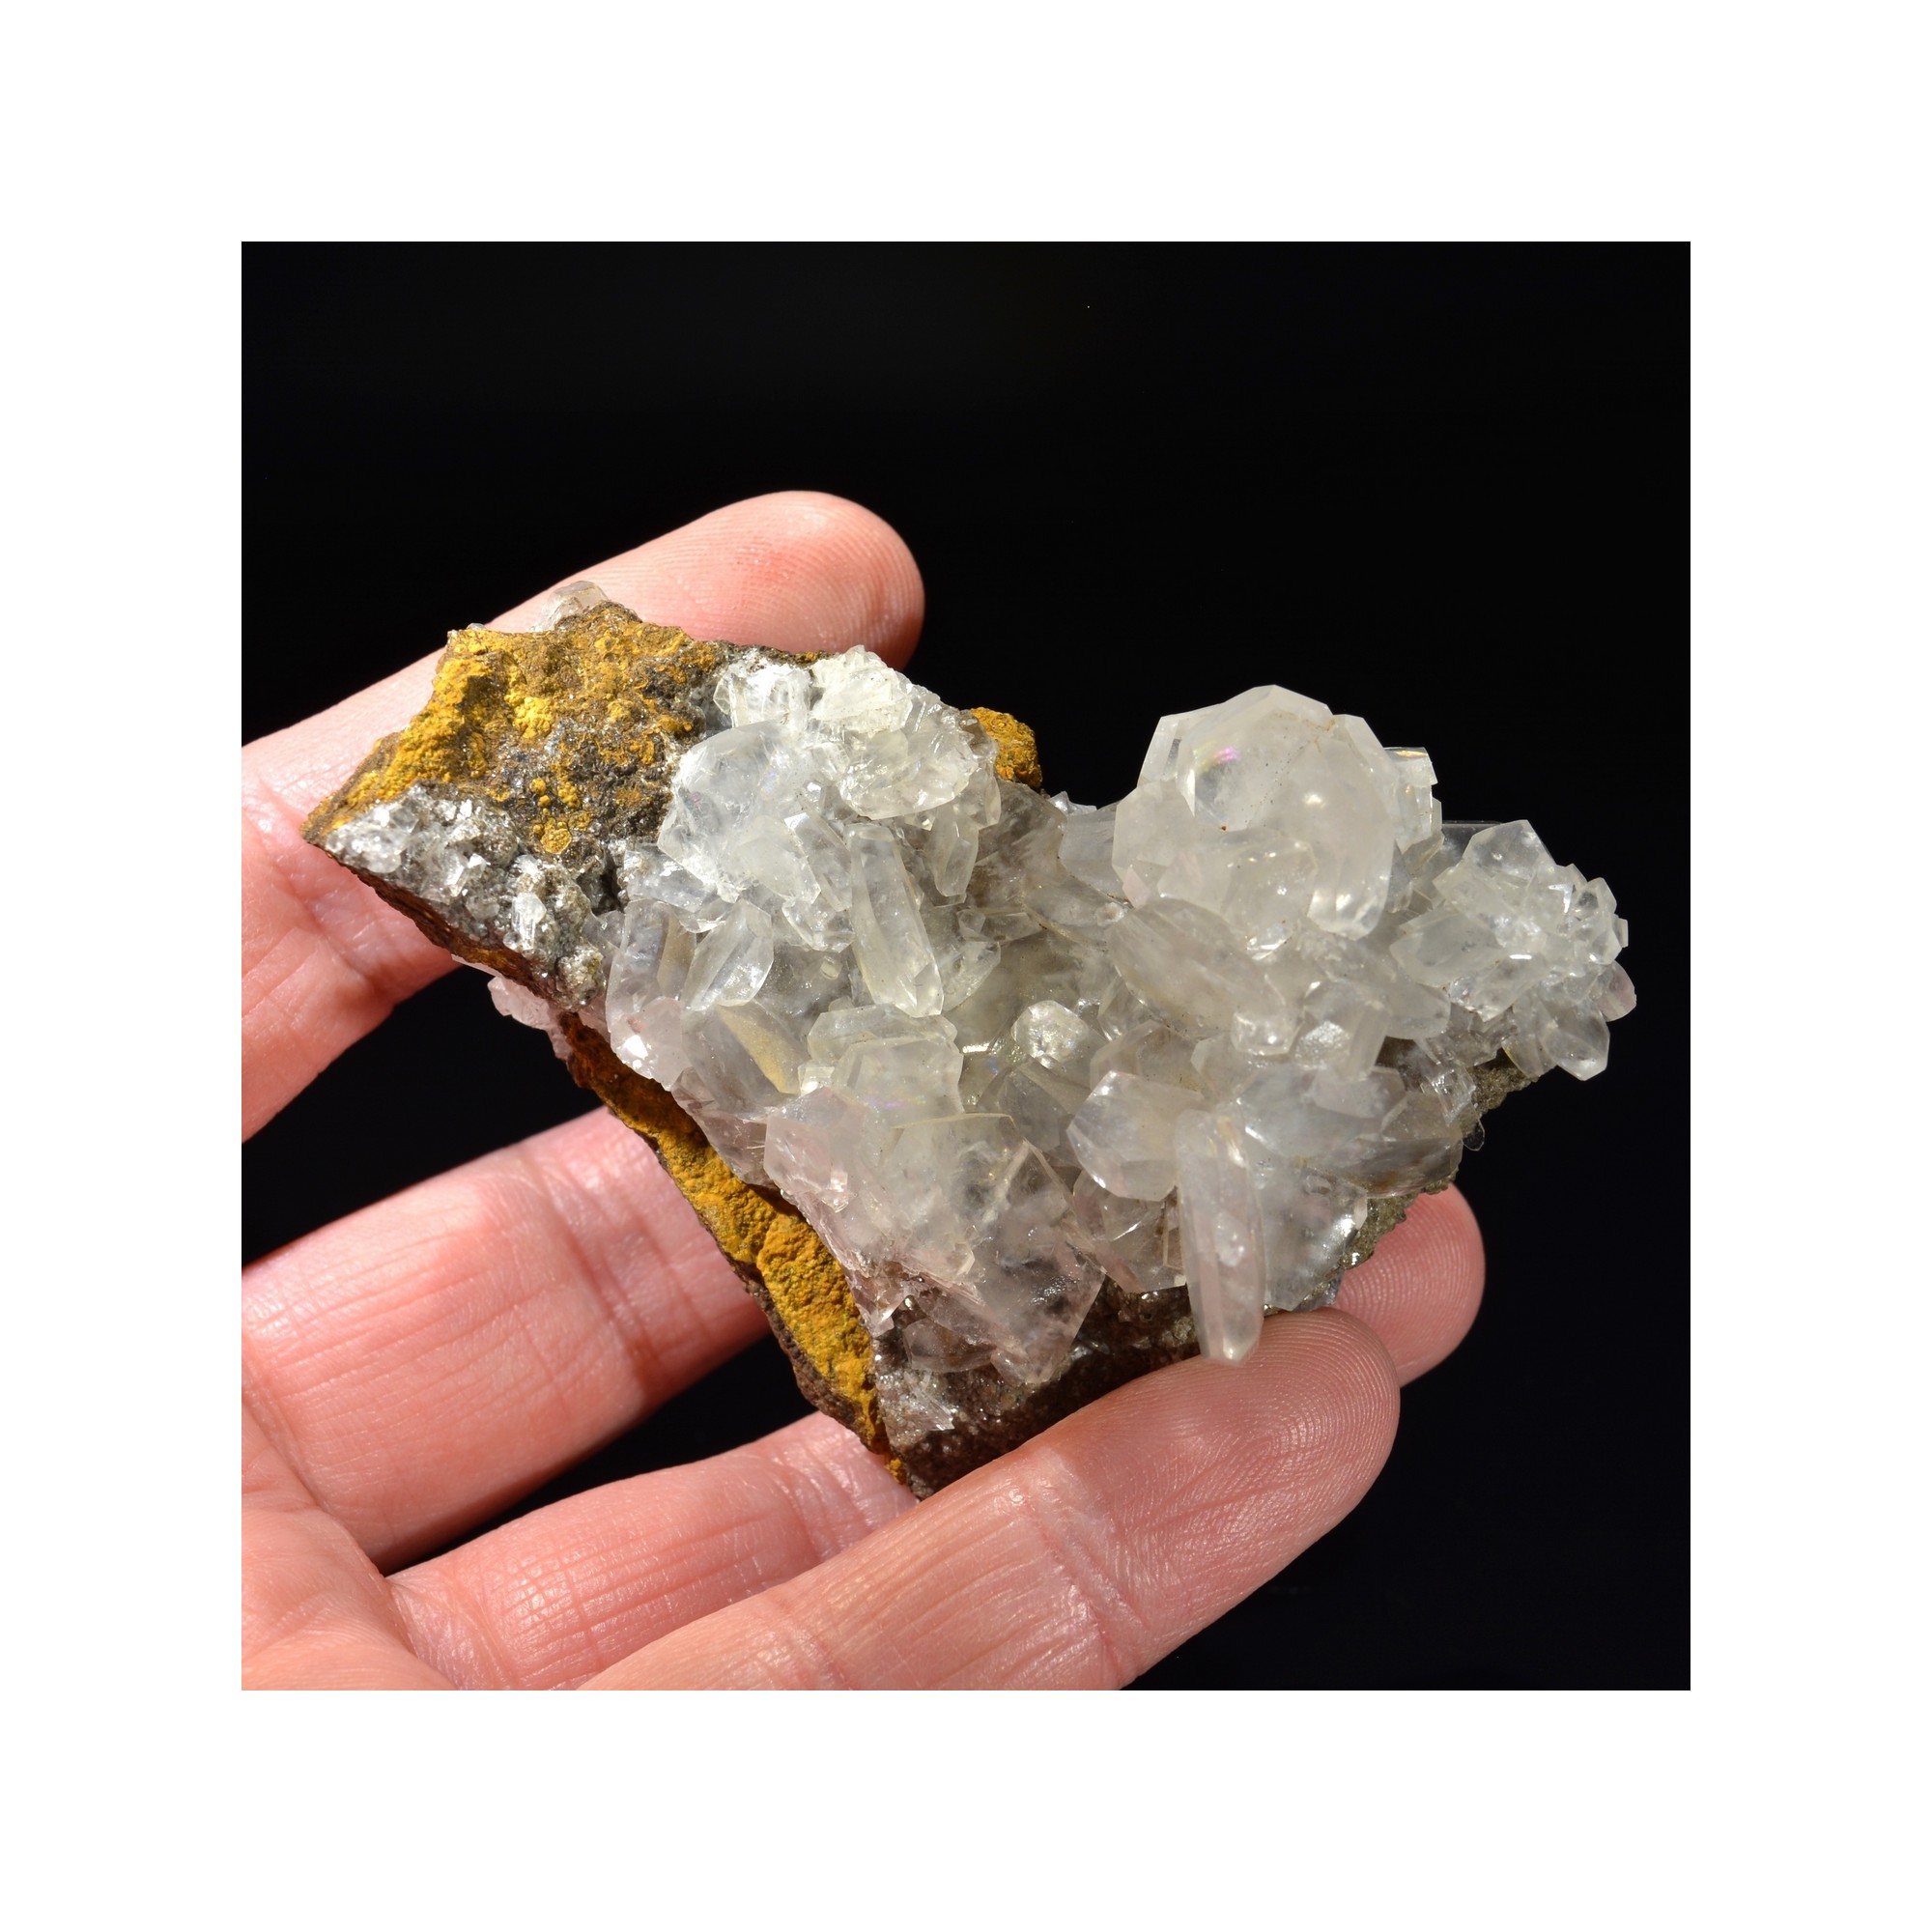 Hexagonal calcite - Ojuela mine, Mapimi, Durango, Mexico